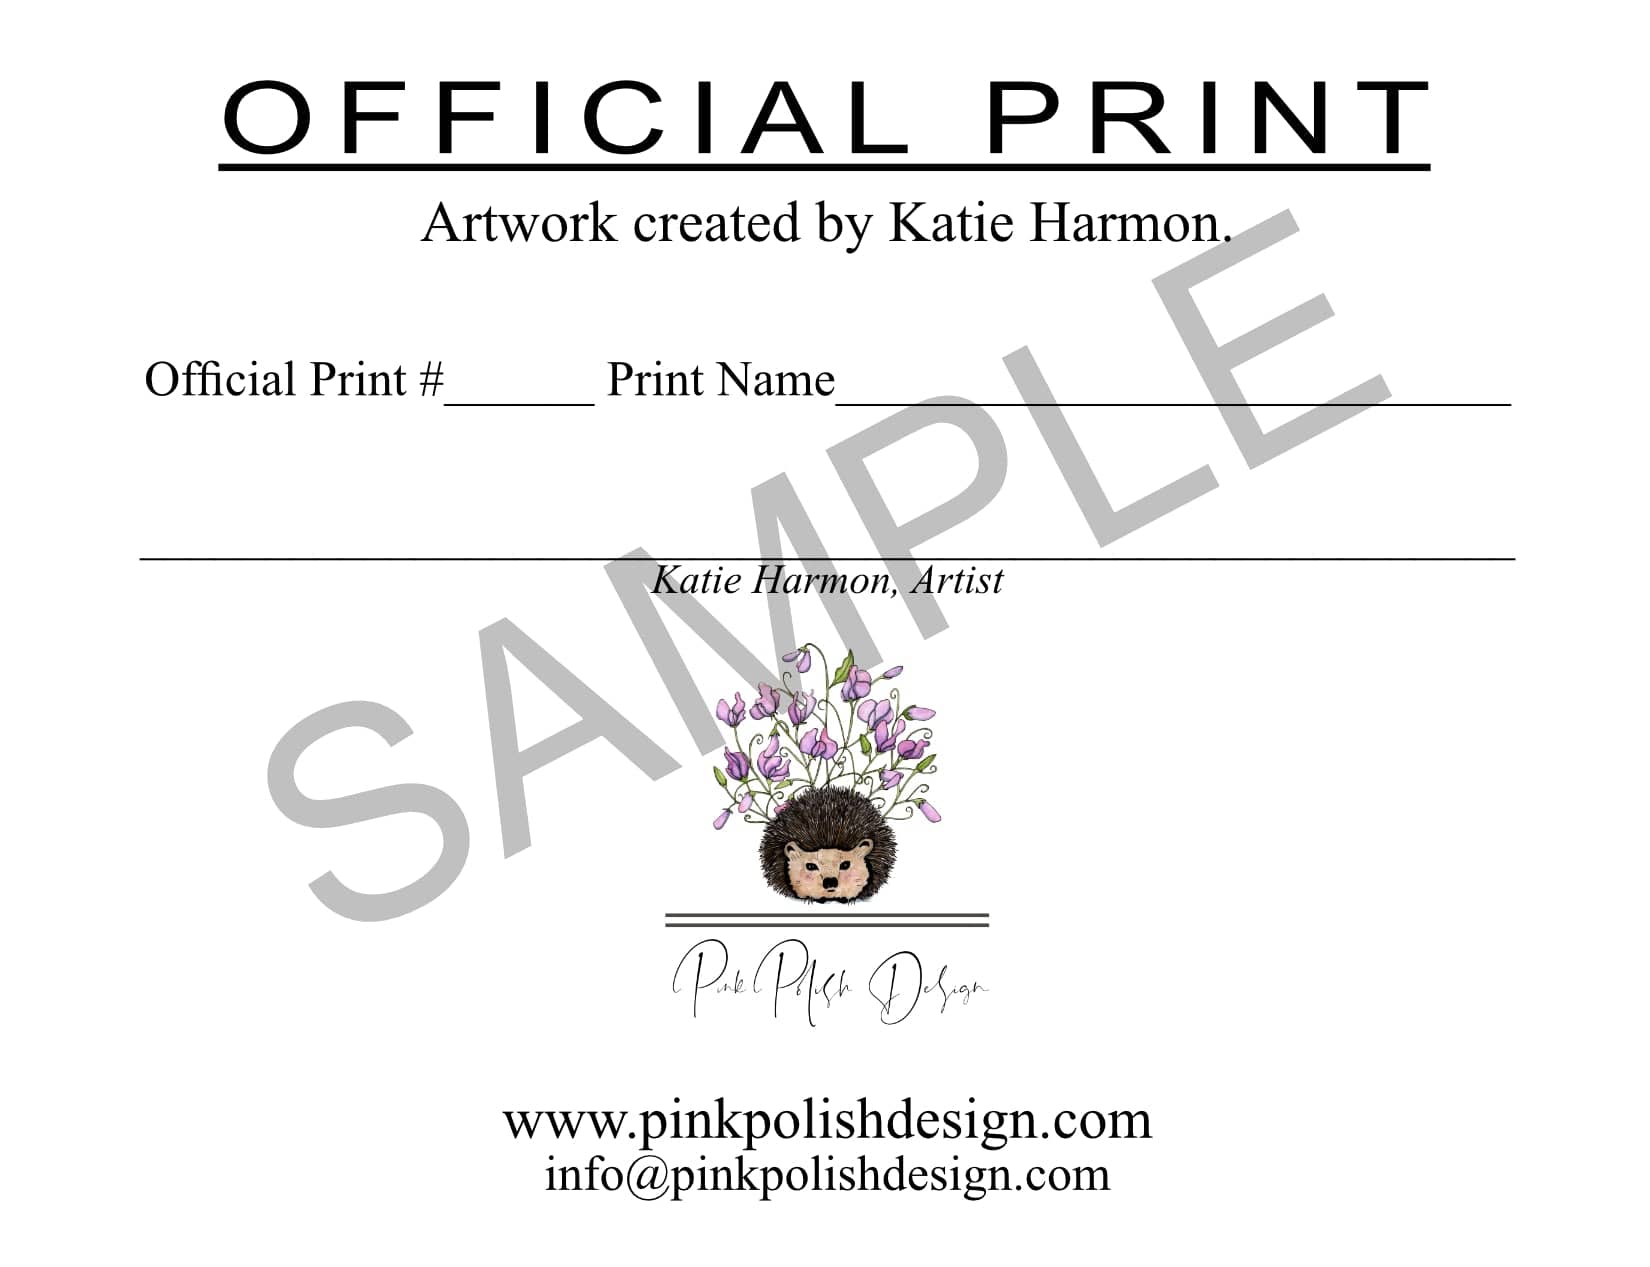 PinkPolish Design Art Prints "Pea Sprout" Watercolor Painting: Art Print